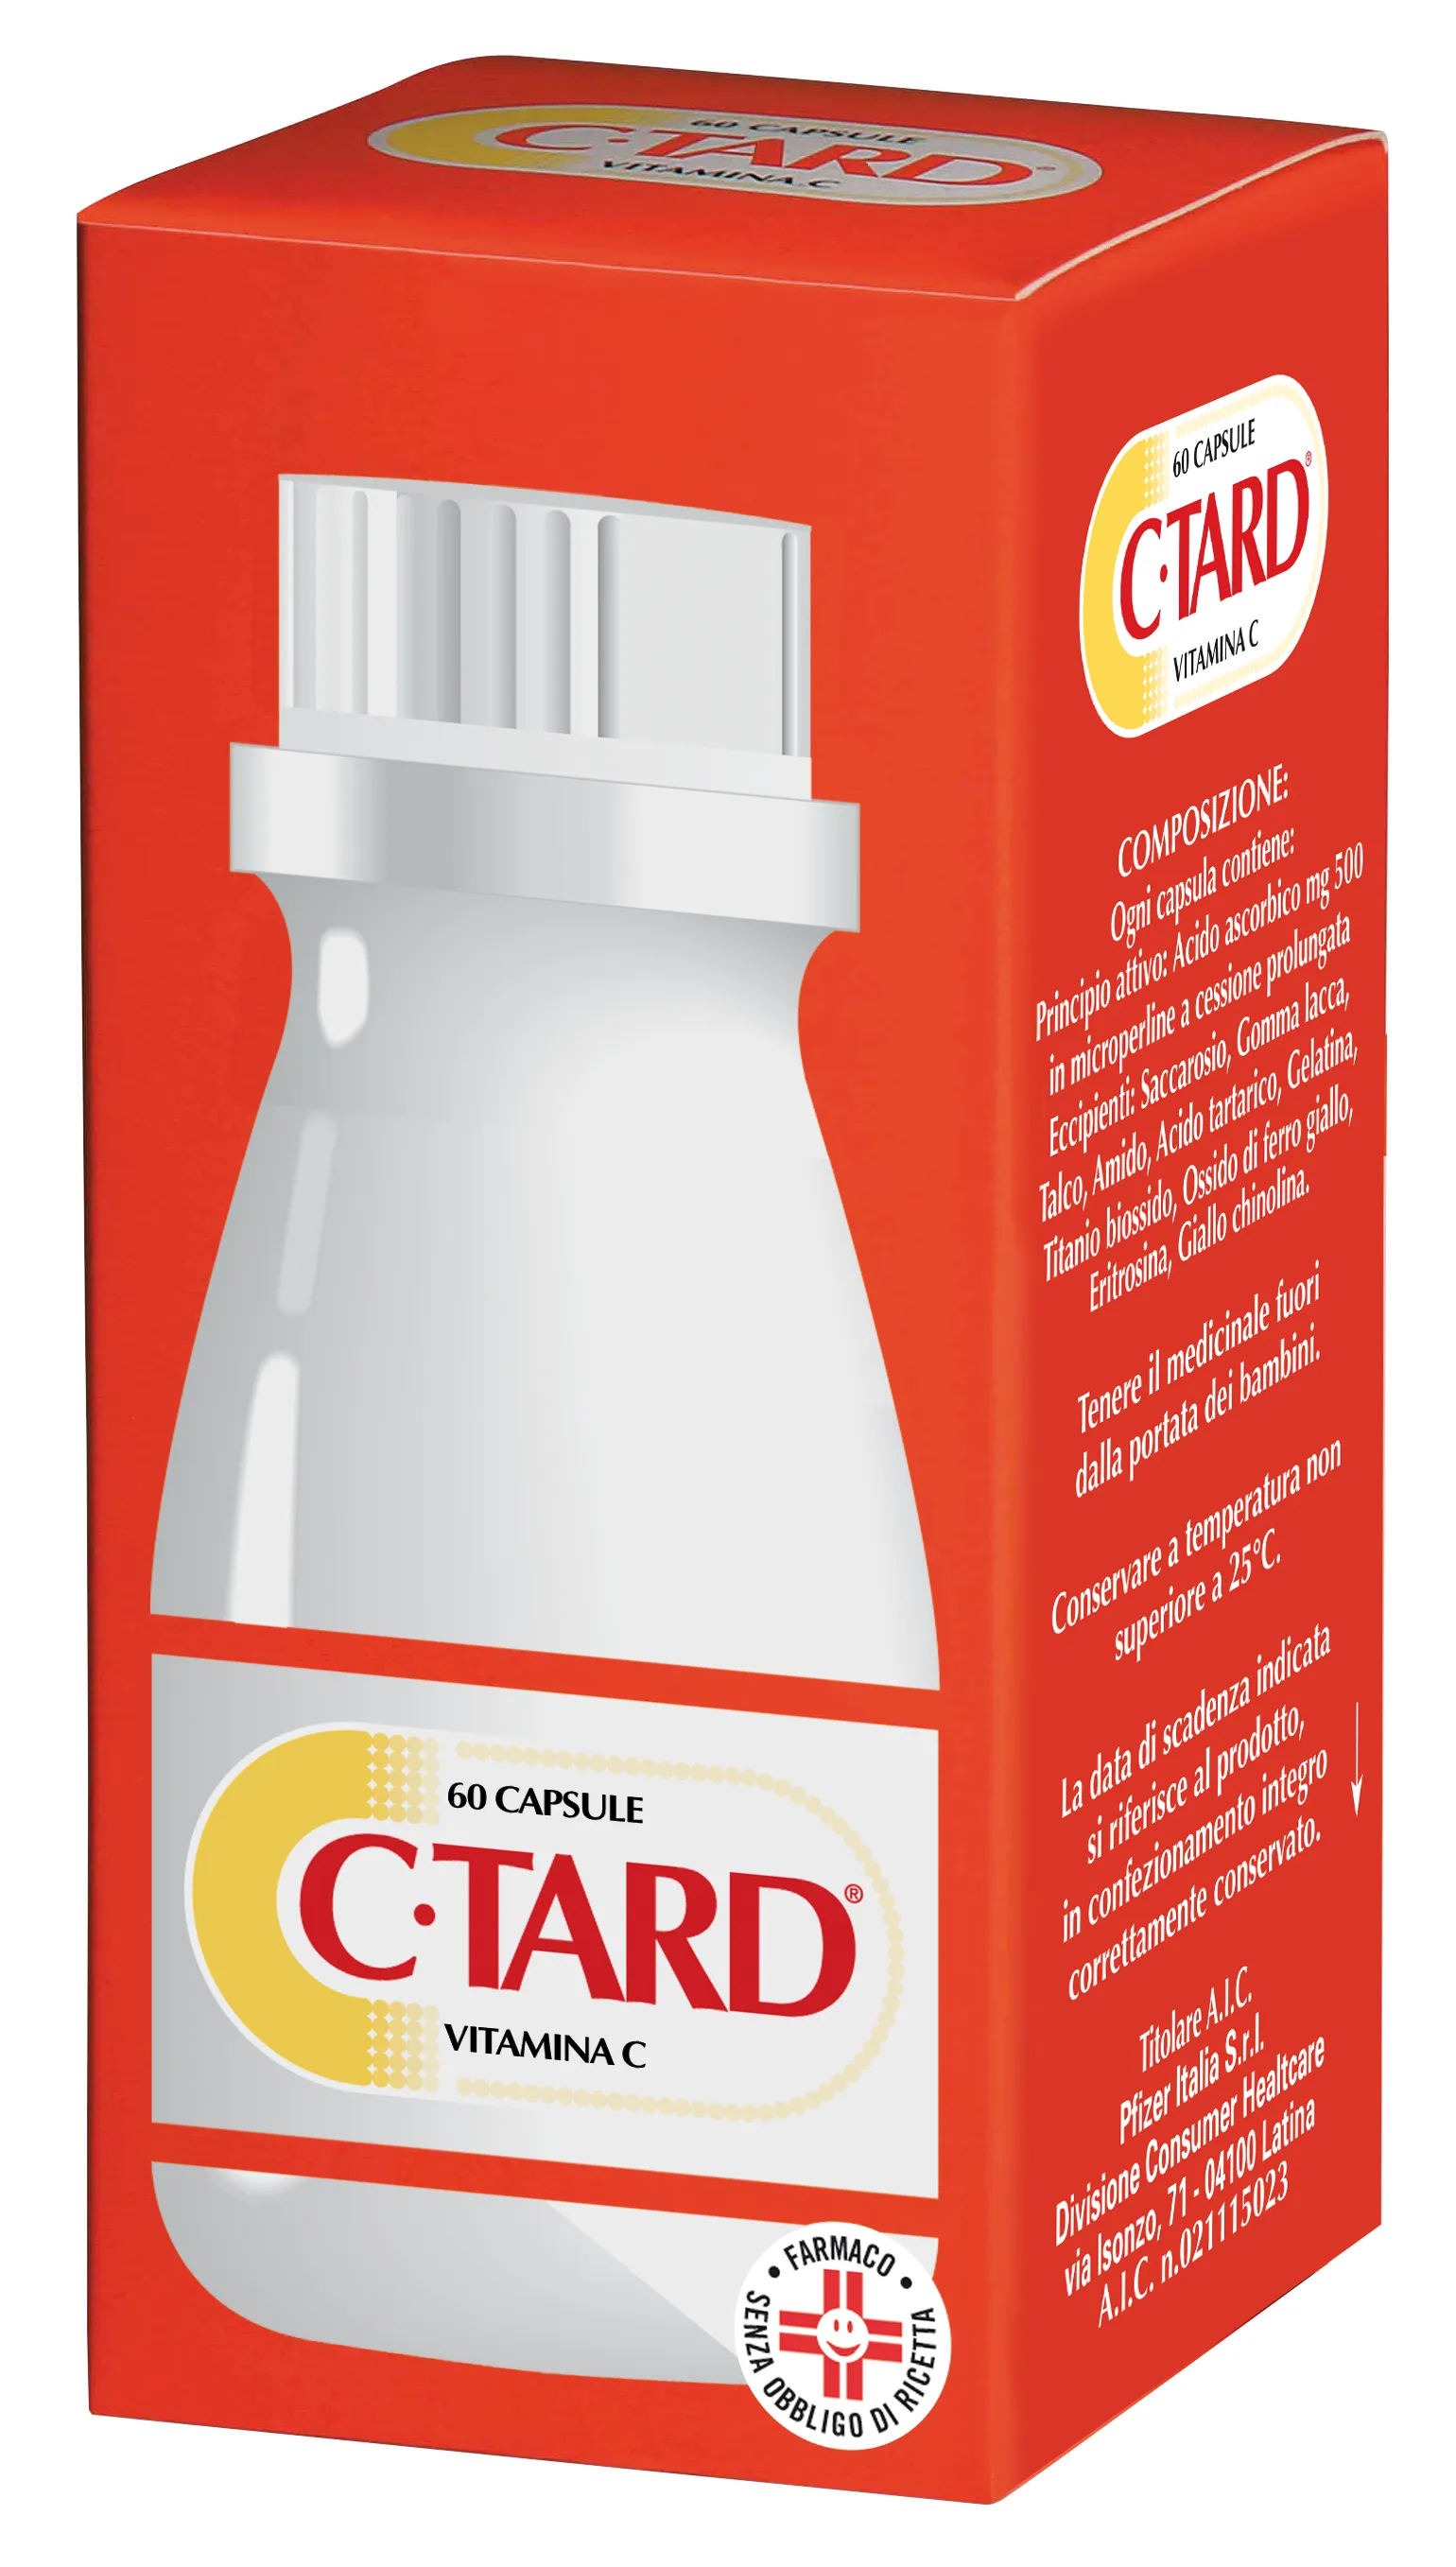 C Tard 500 mg 60 Capsule Rilascio Prolungato - Integratore Vitamina C